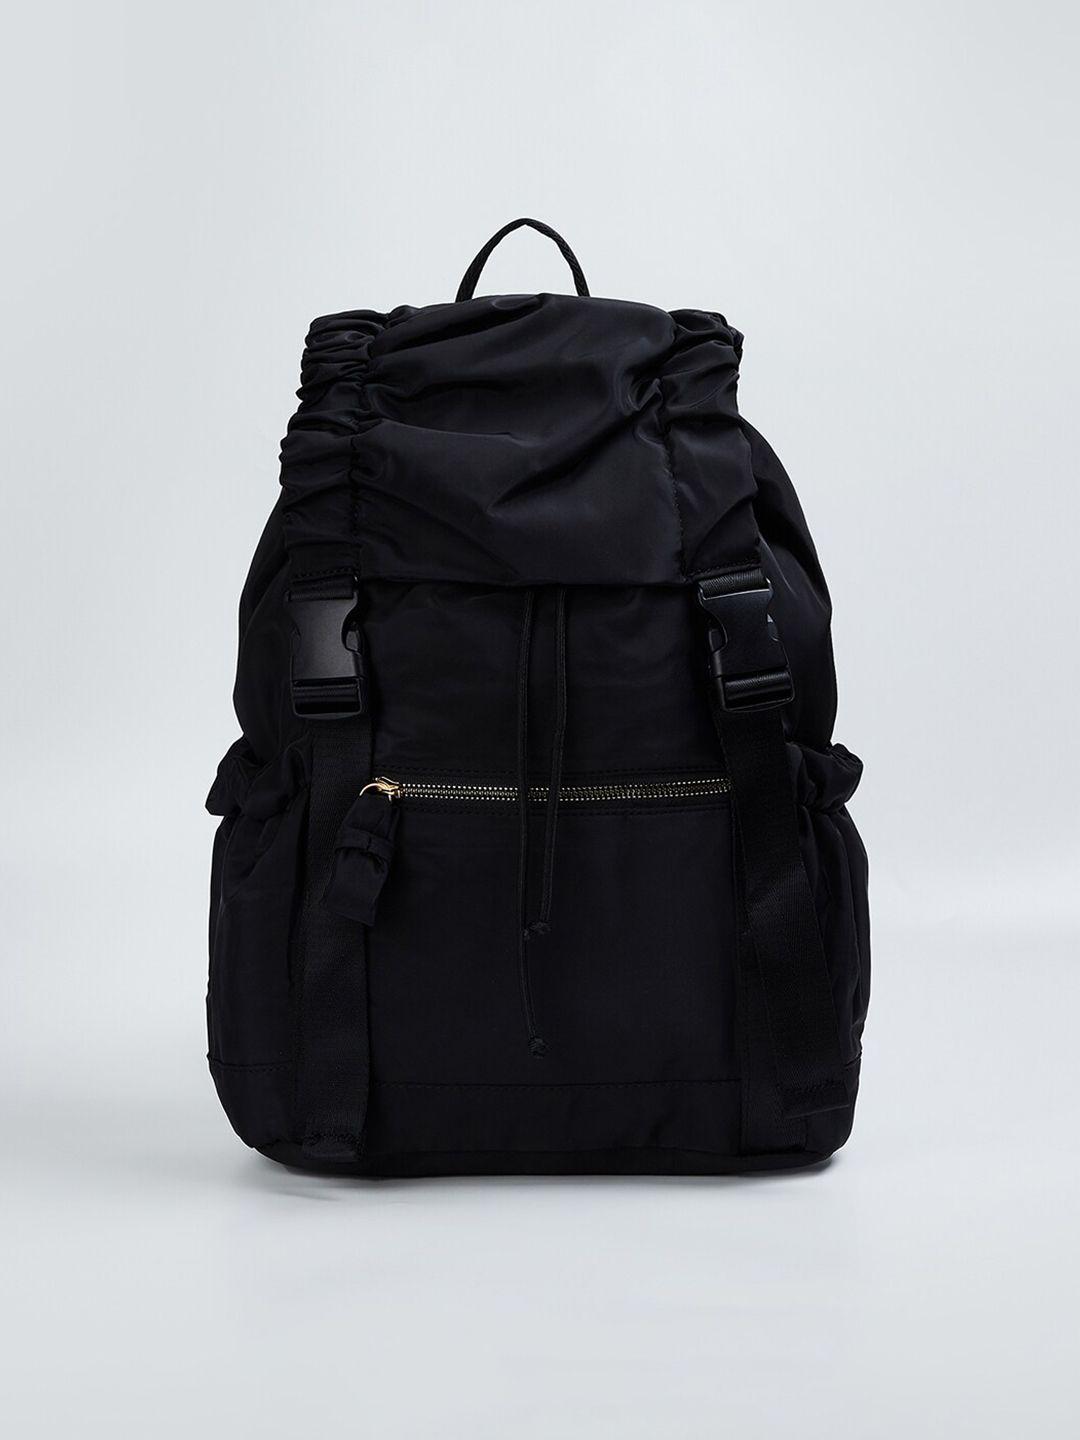 max women black backpack